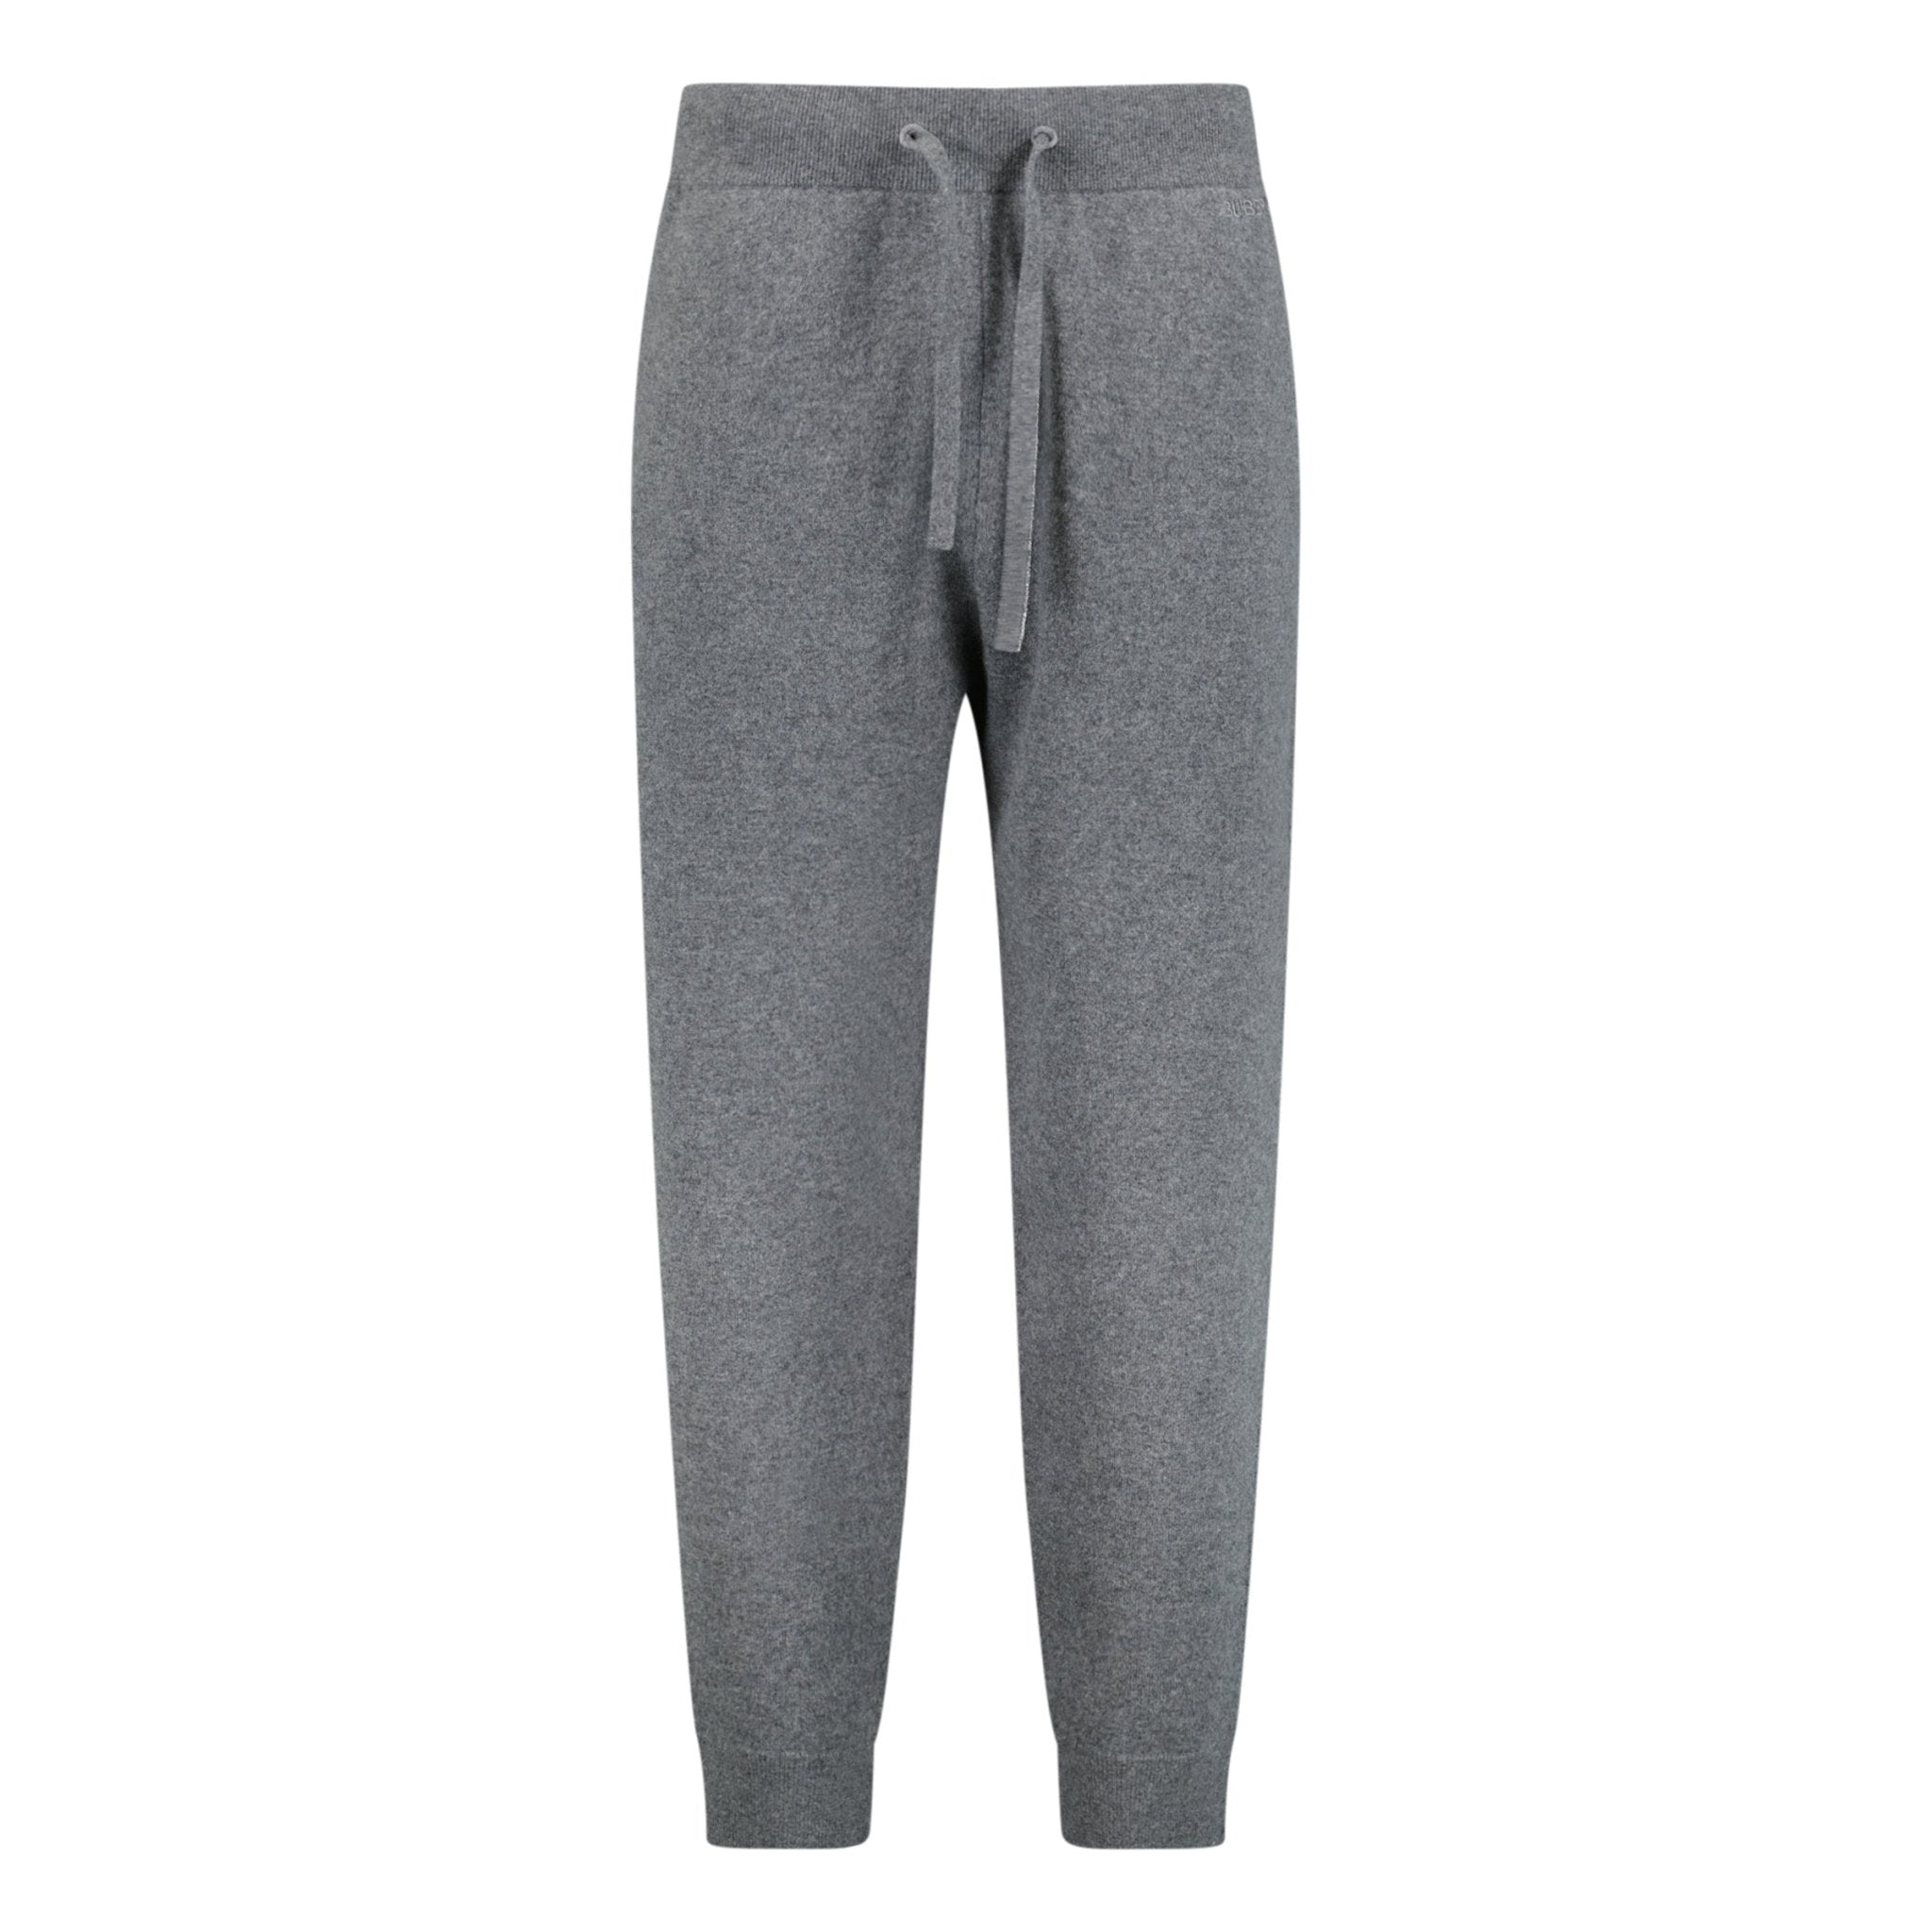 Burberry 'Hunton' Knitted Cuffed Cashmere Sweatpants Grey